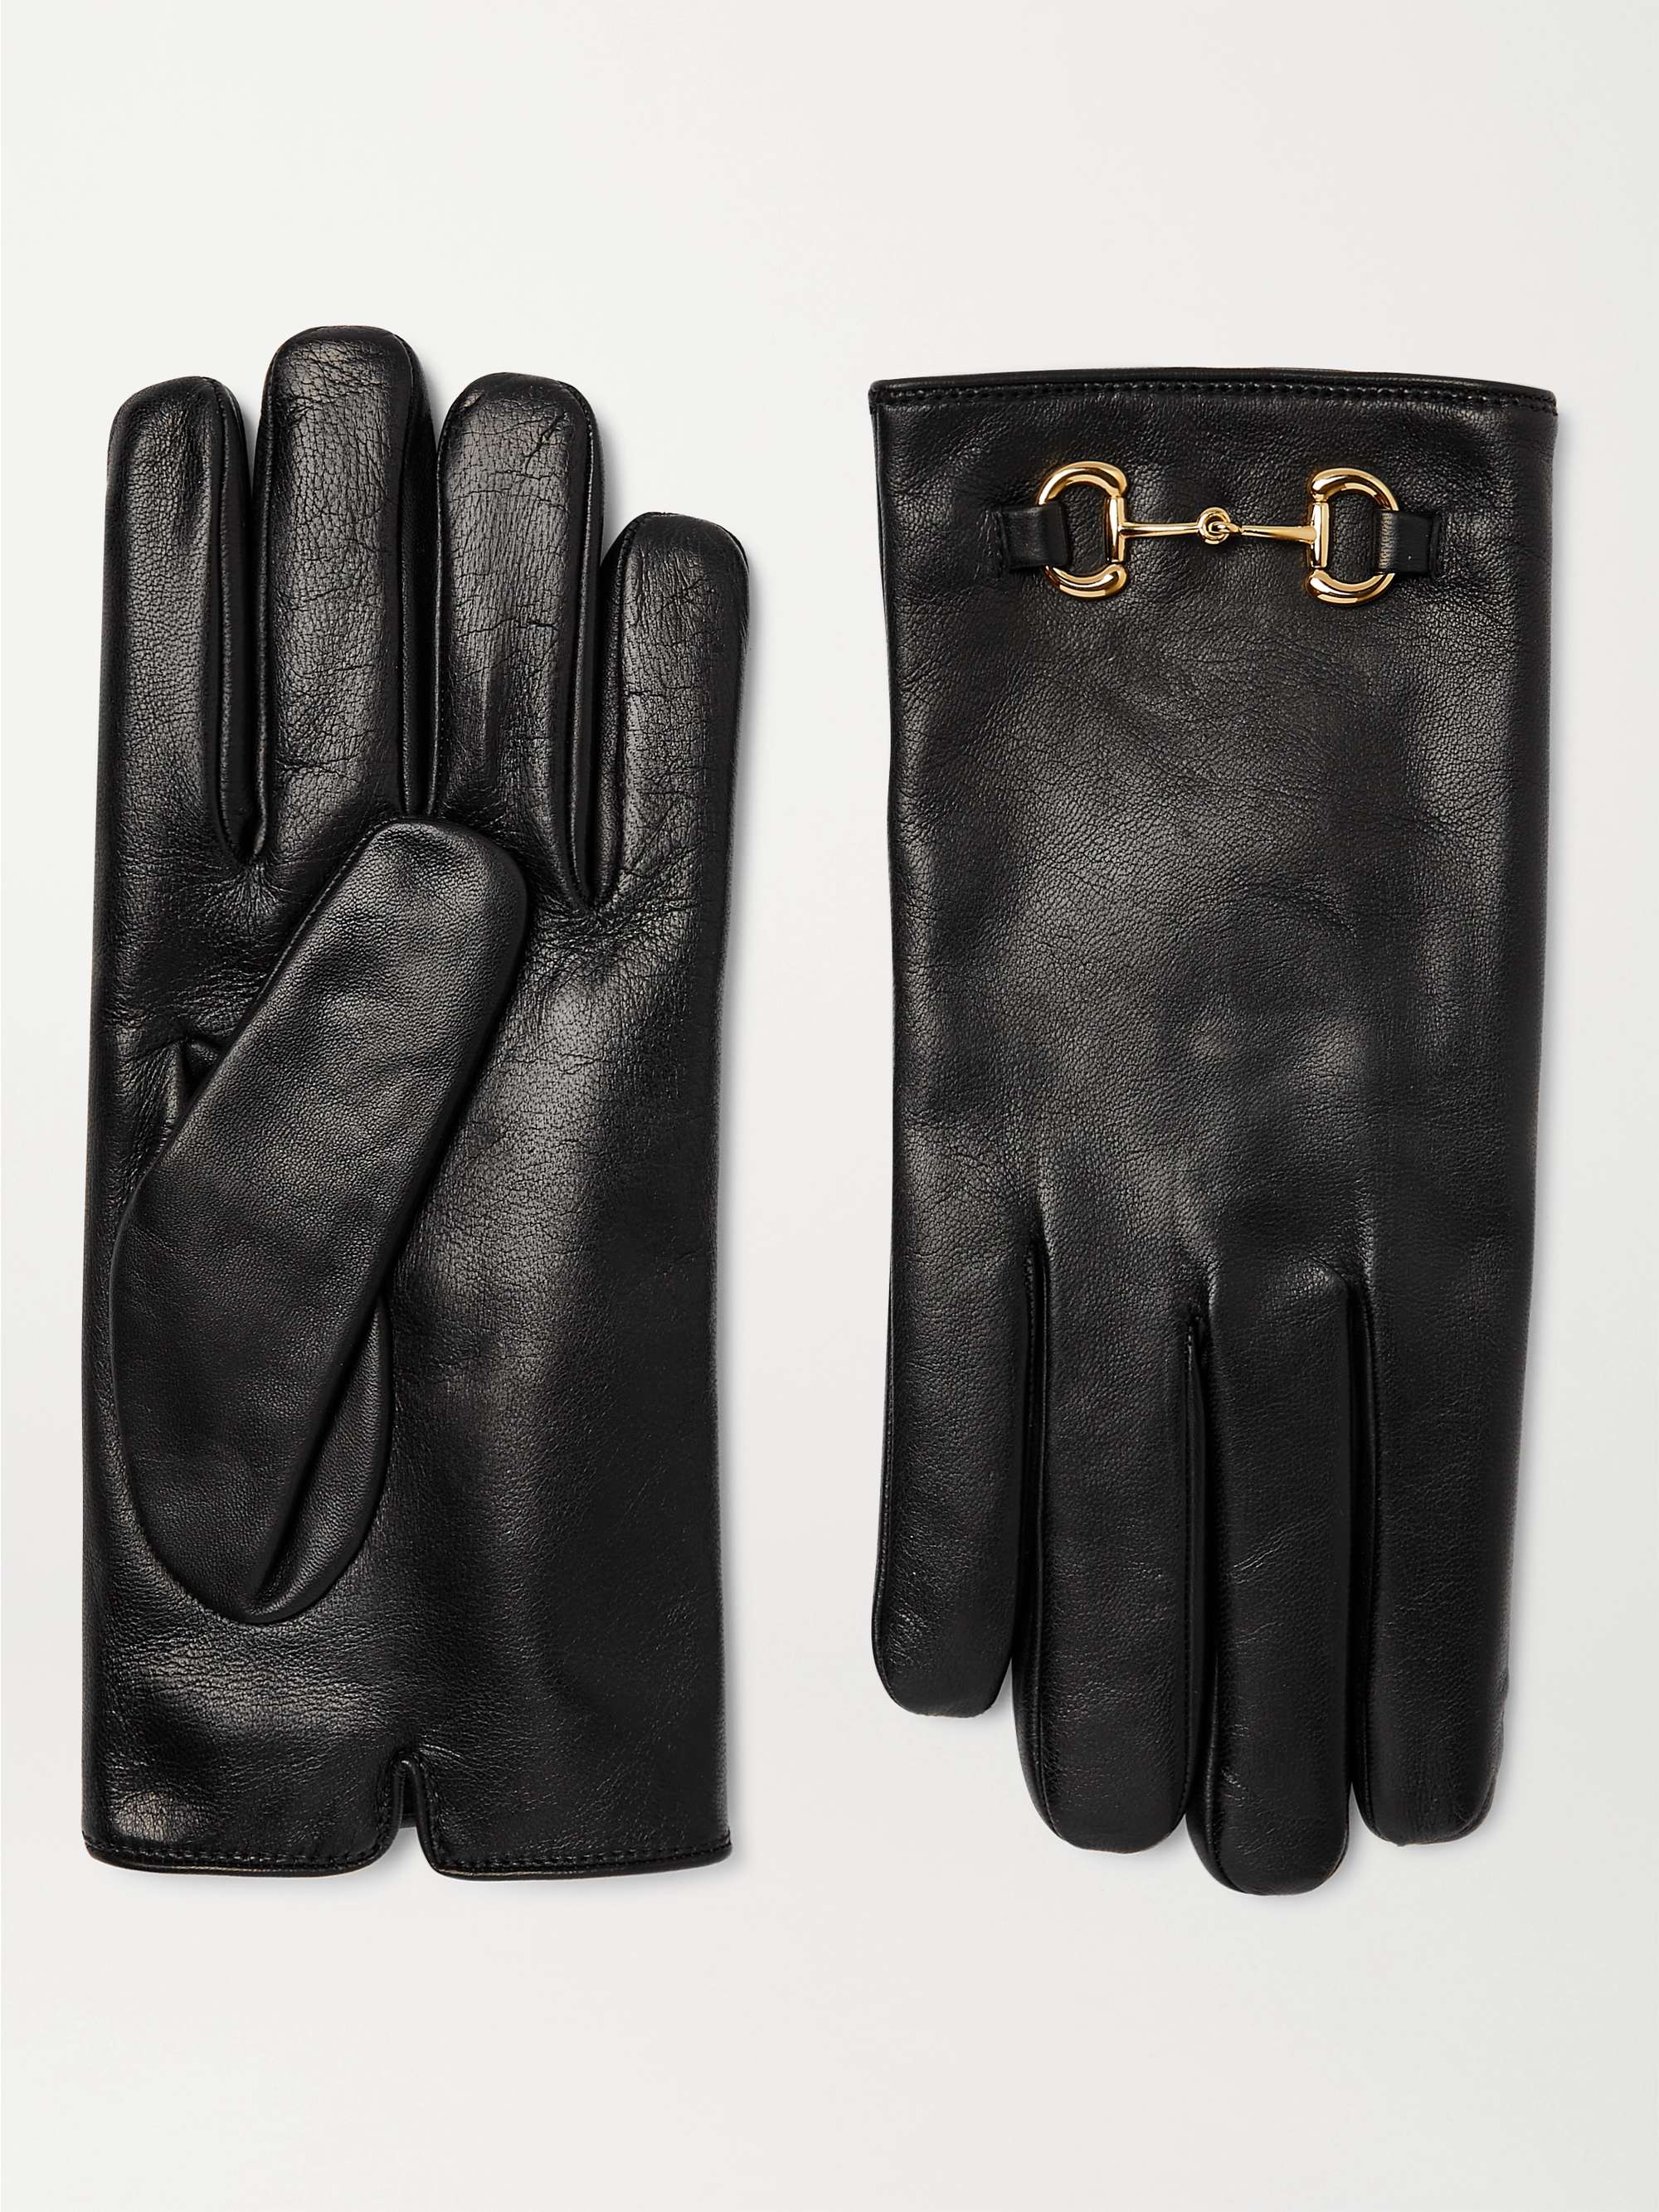 GUCCI Horsebit Cashmere-Lined Leather Gloves | MR PORTER